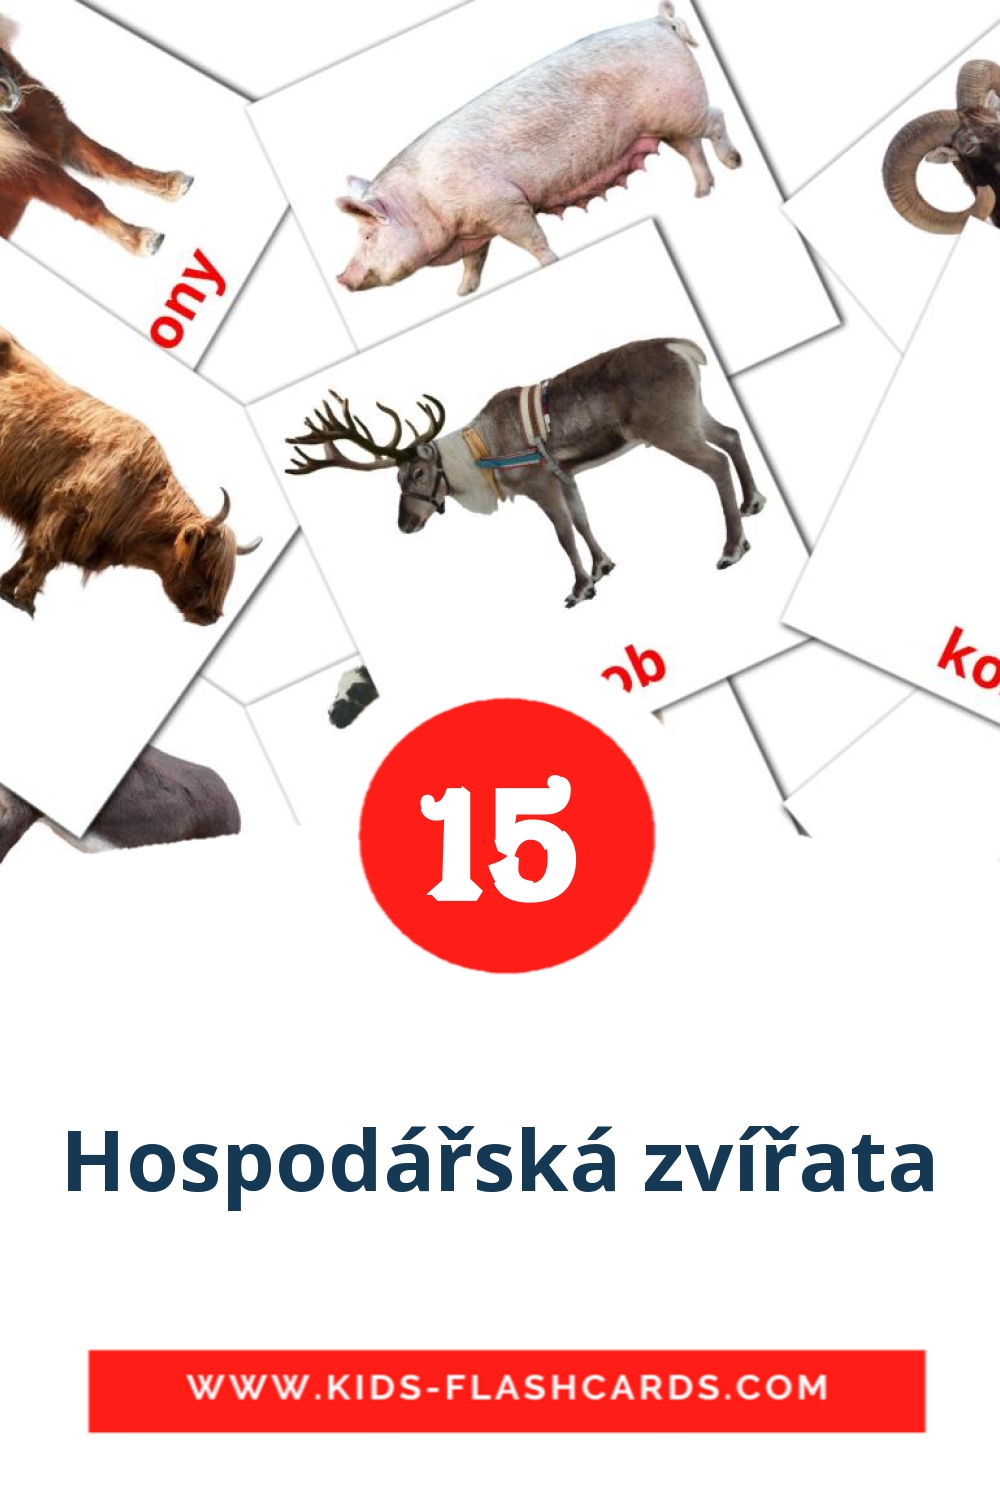 Hospodářská zvířata на чешском для Детского Сада (15 карточек)